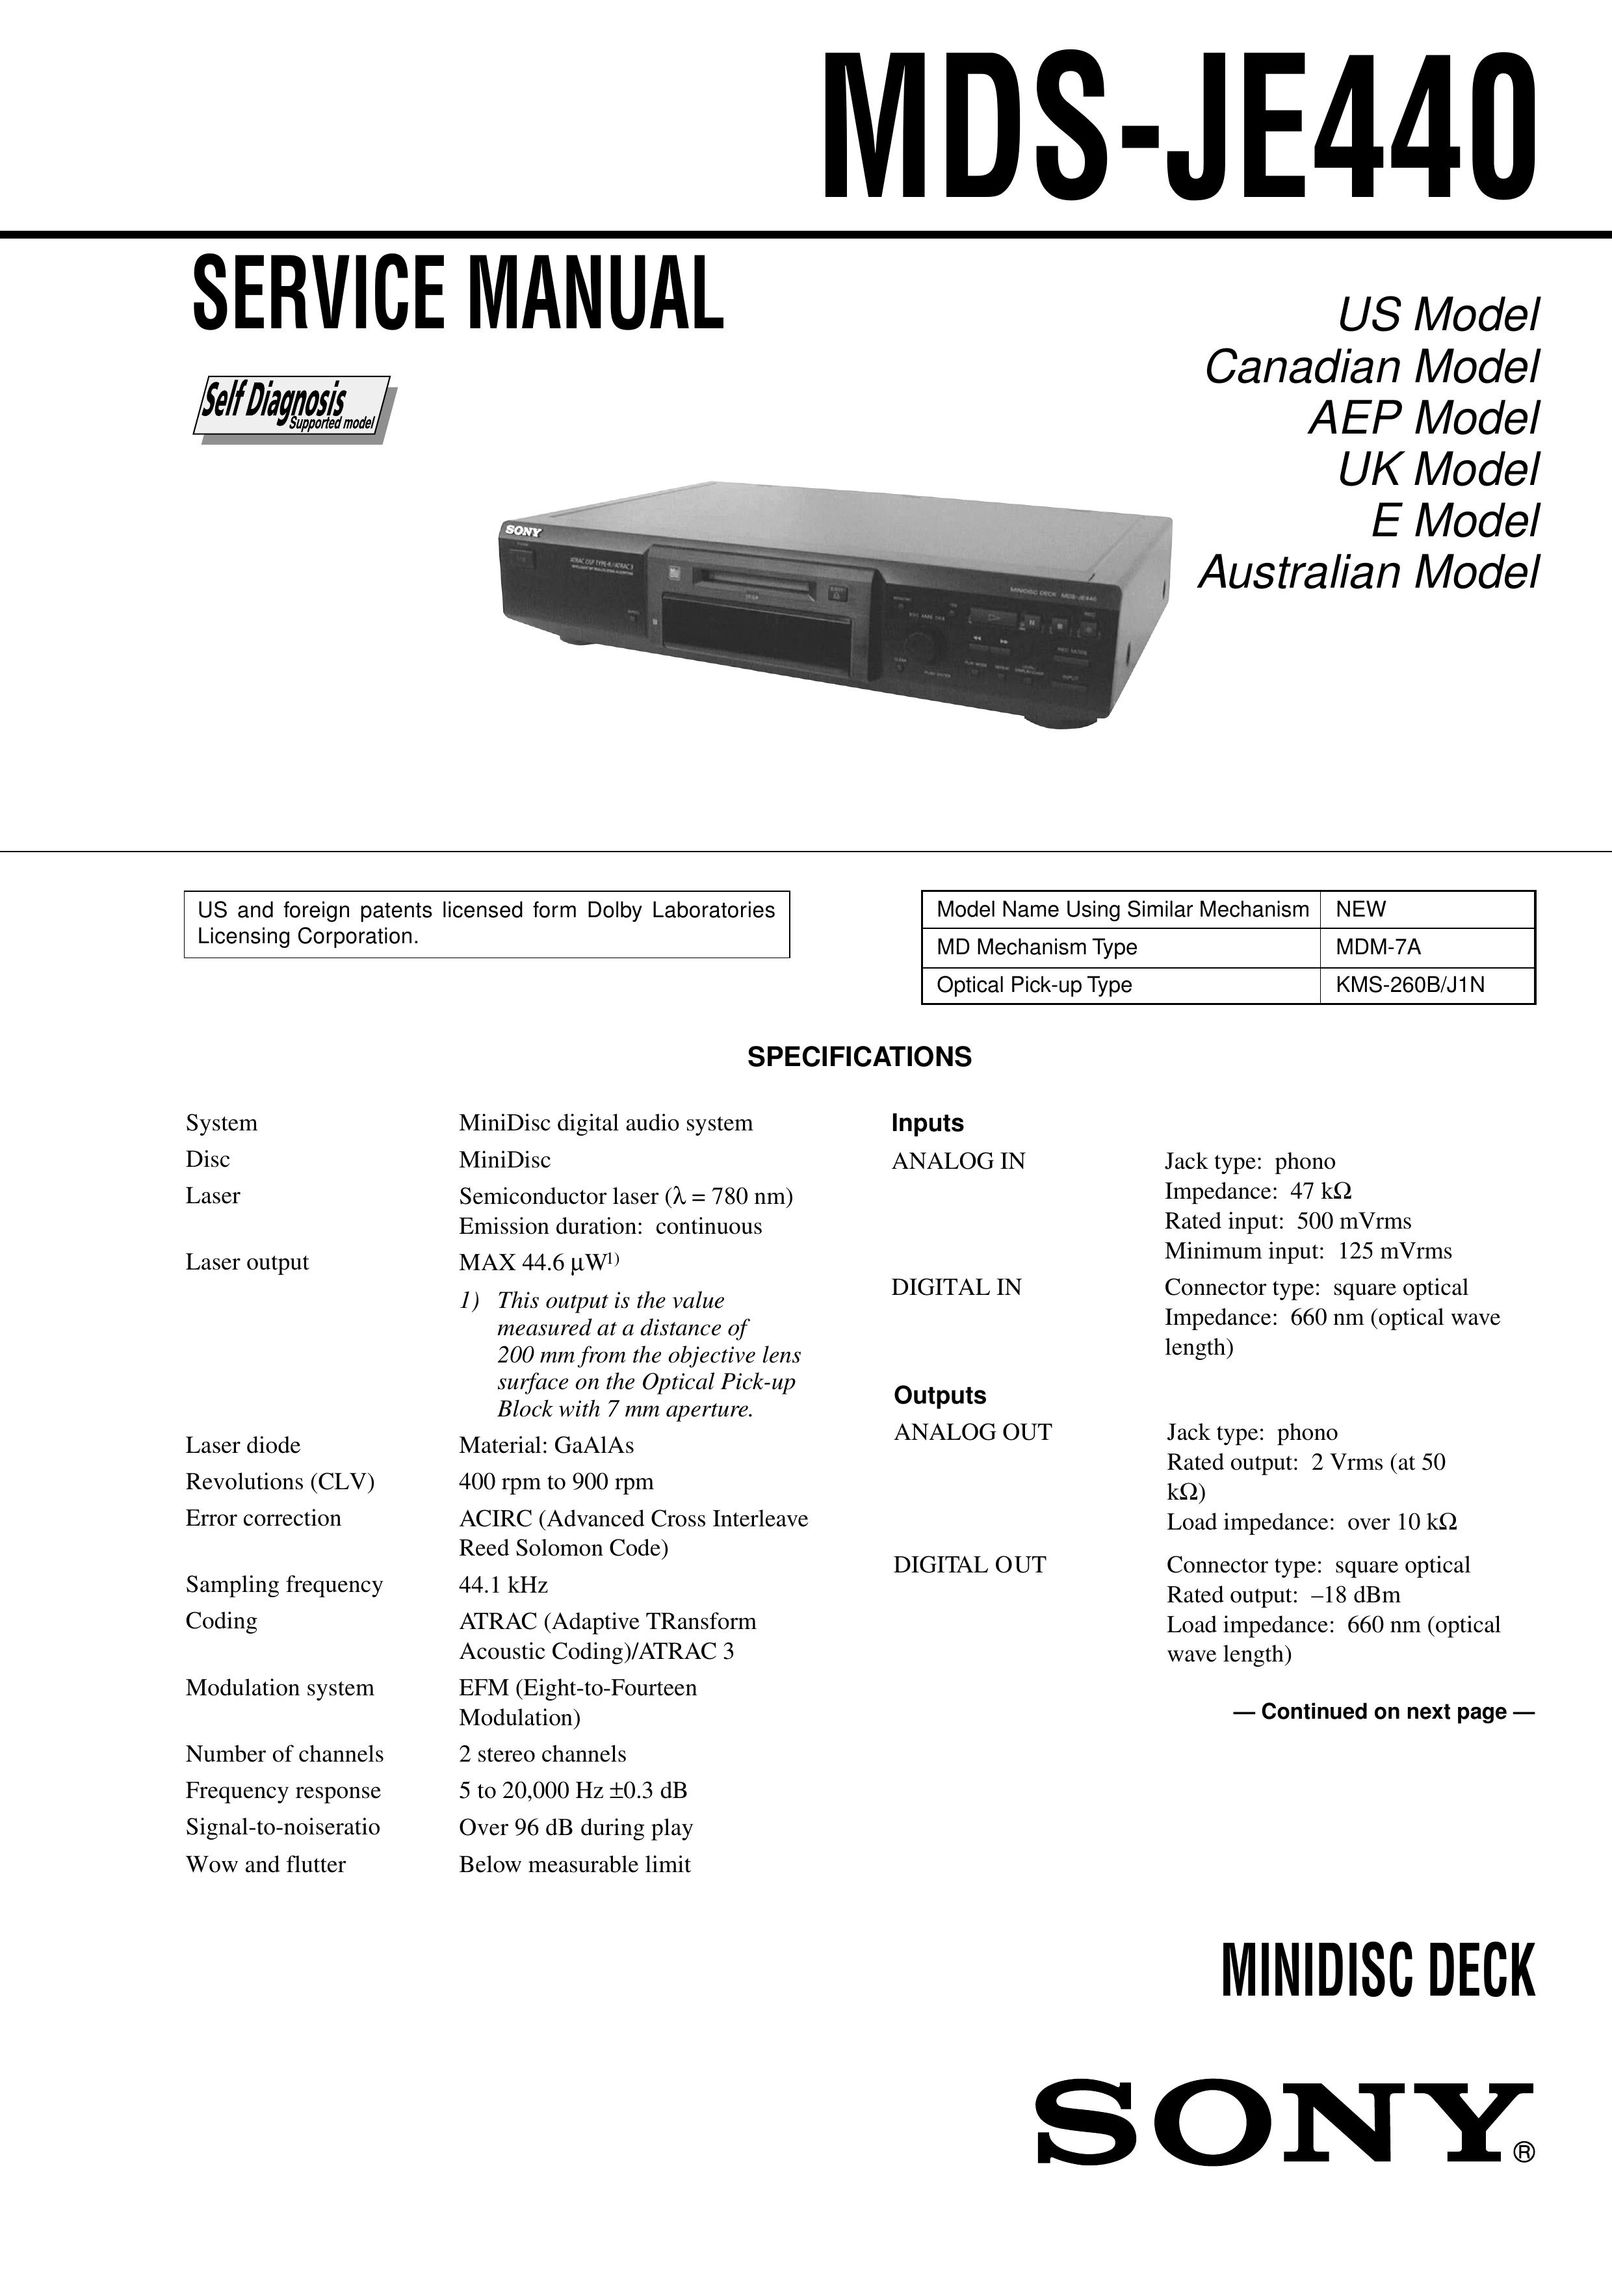 Sony KMS-2608/J1N Car Video System User Manual